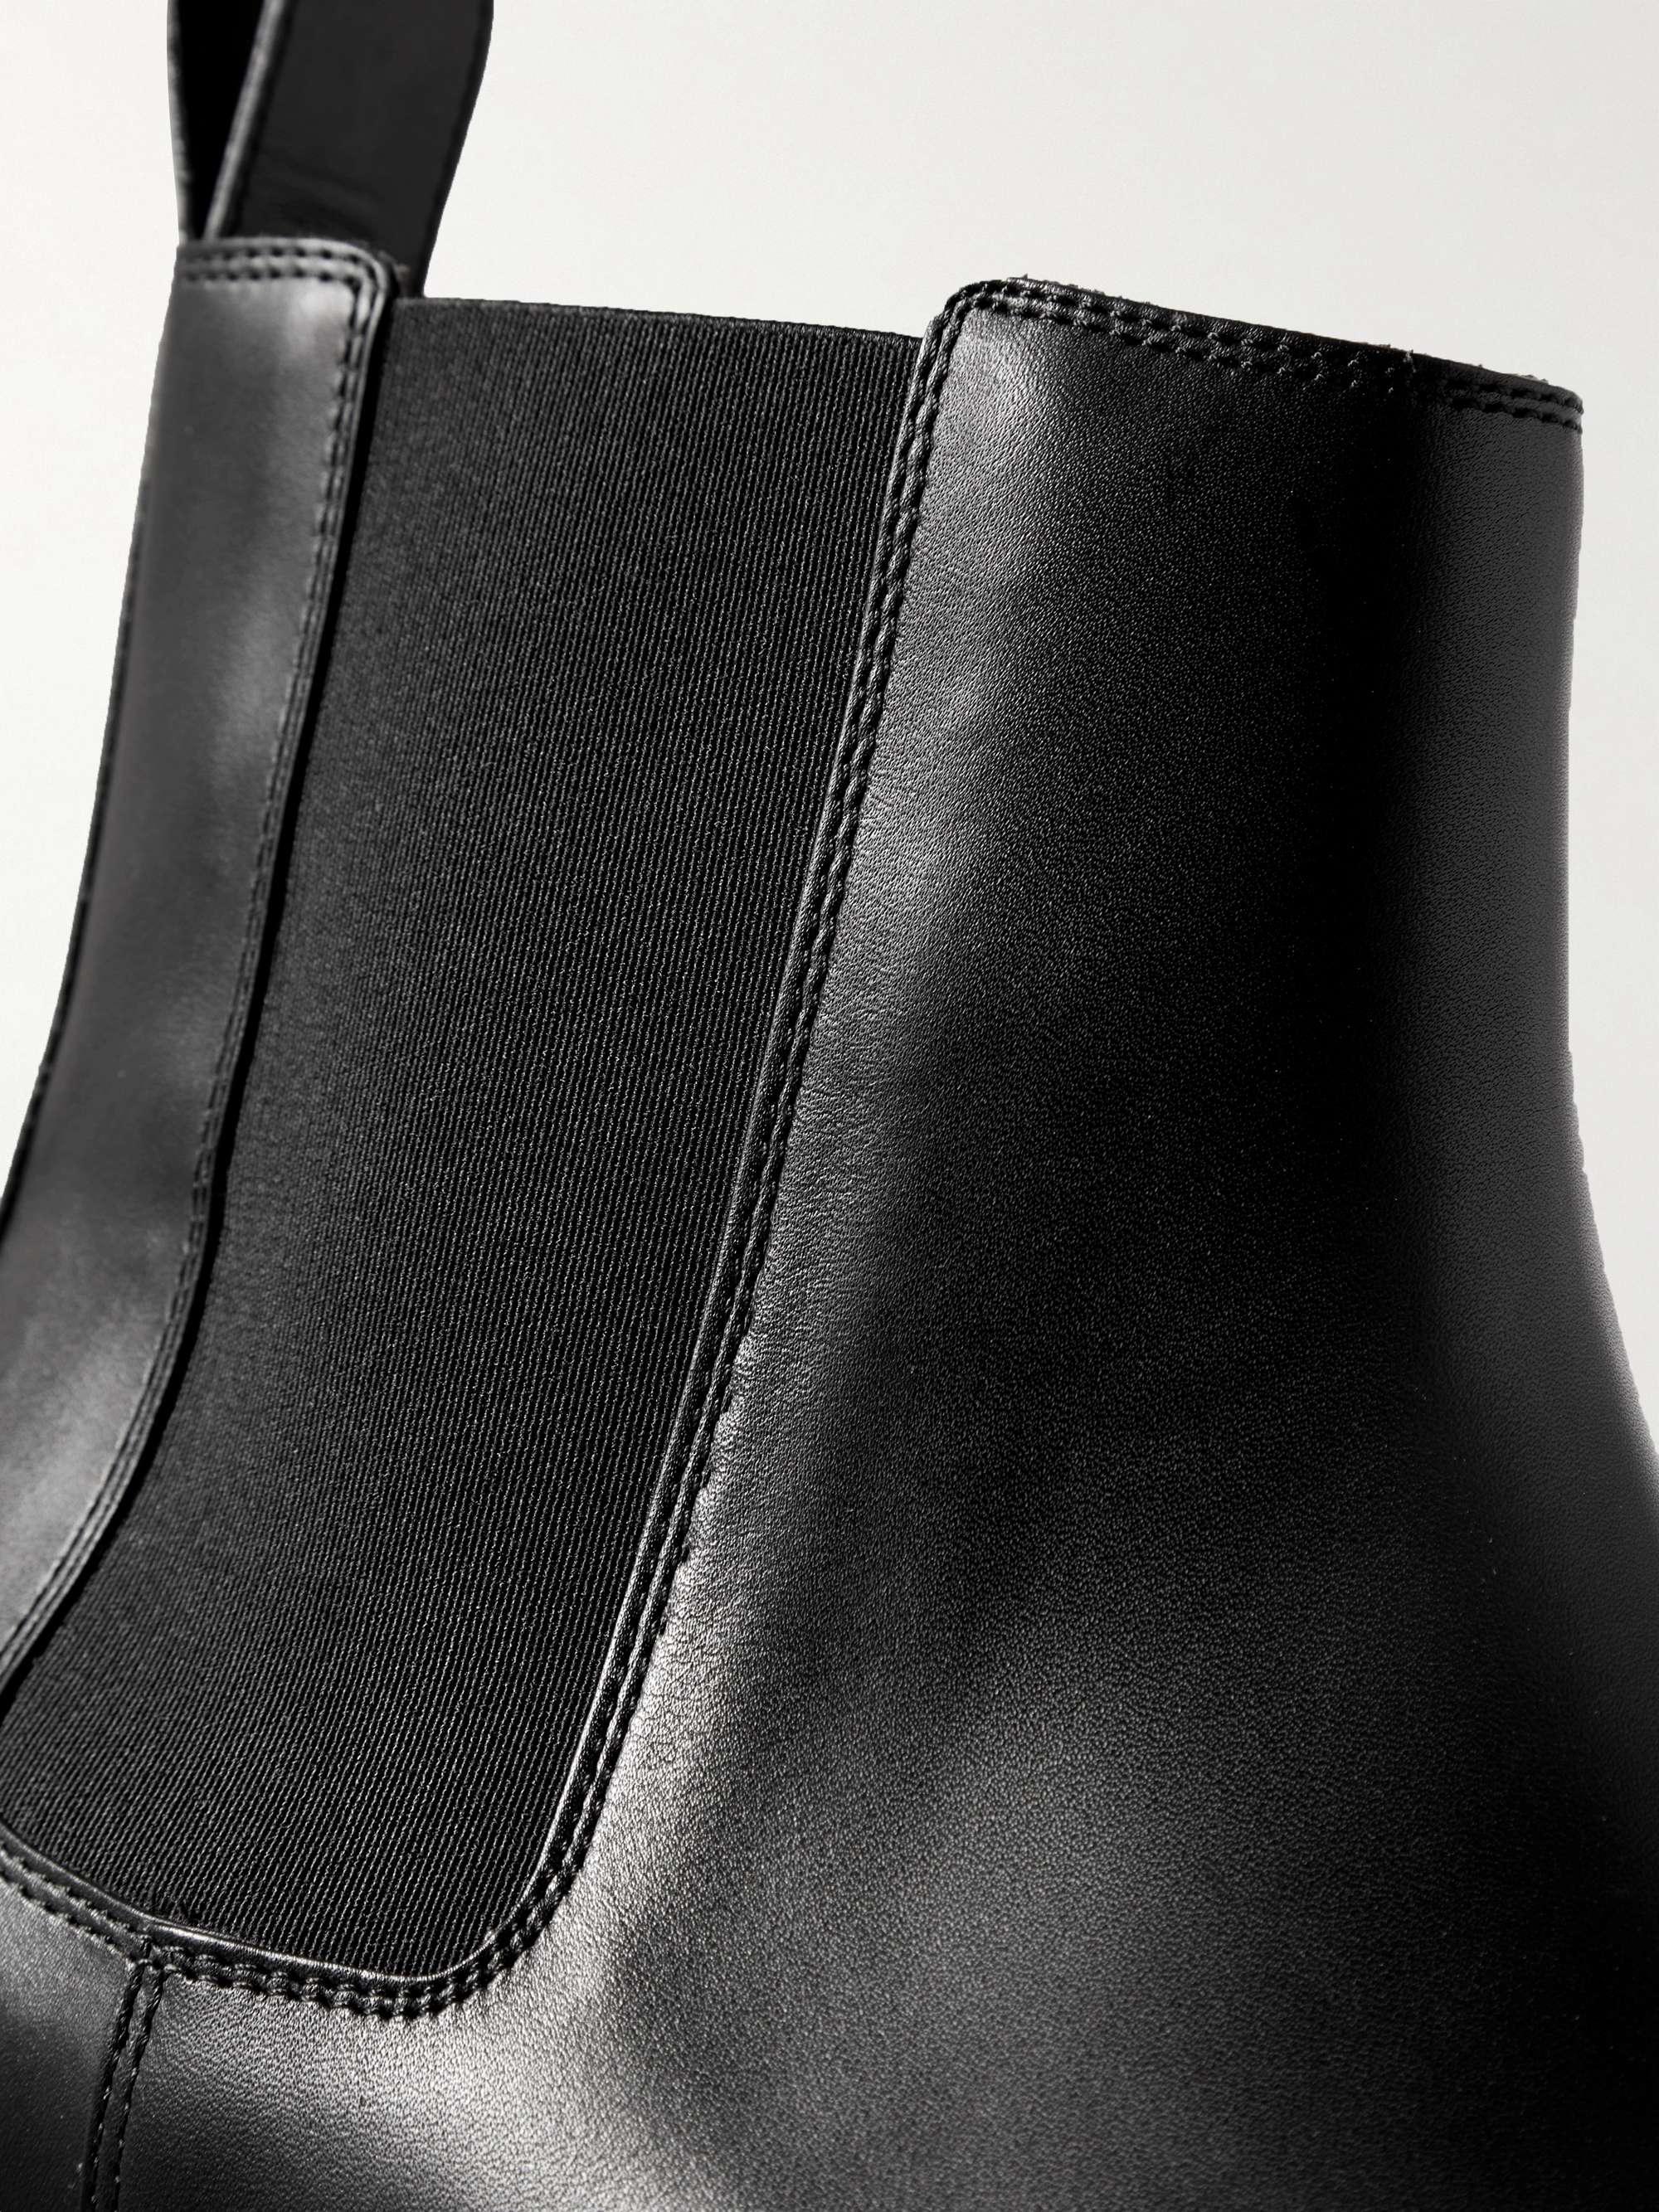 BOTTEGA VENETA Leather Chelsea Boots